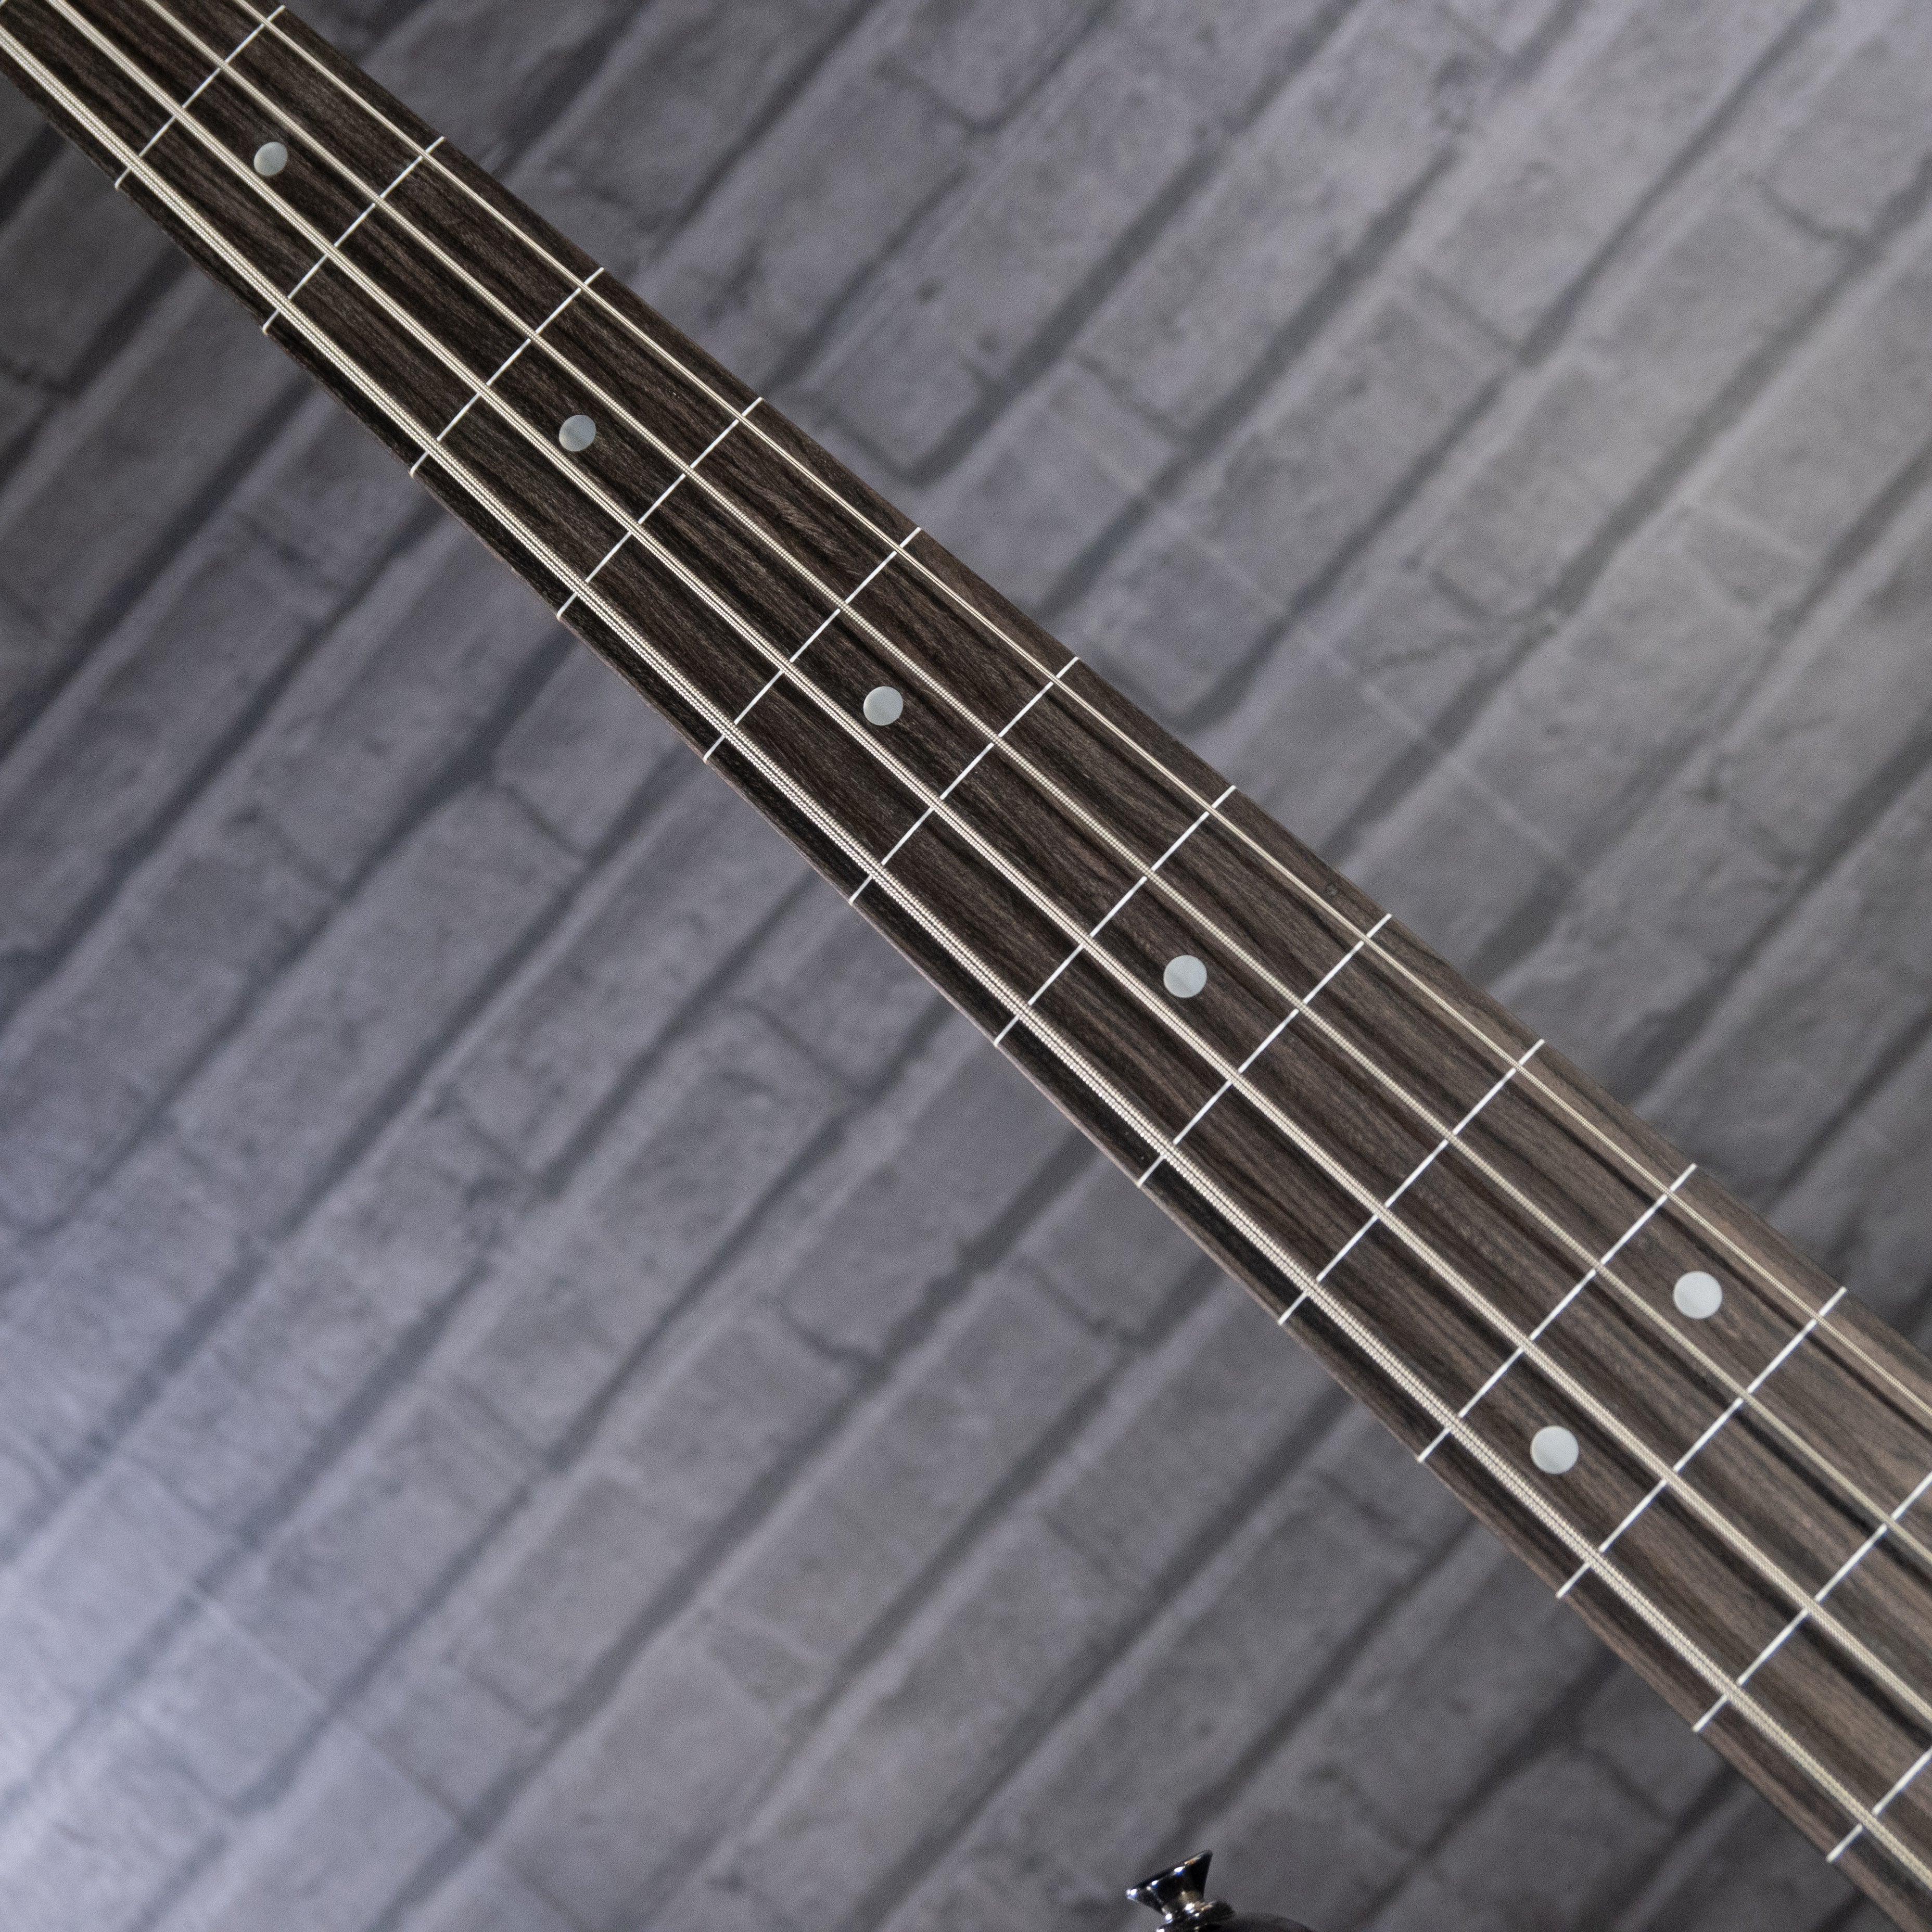 Tagima TW-73 4-String Fretless Electric Bass Guitar (Sunburst)